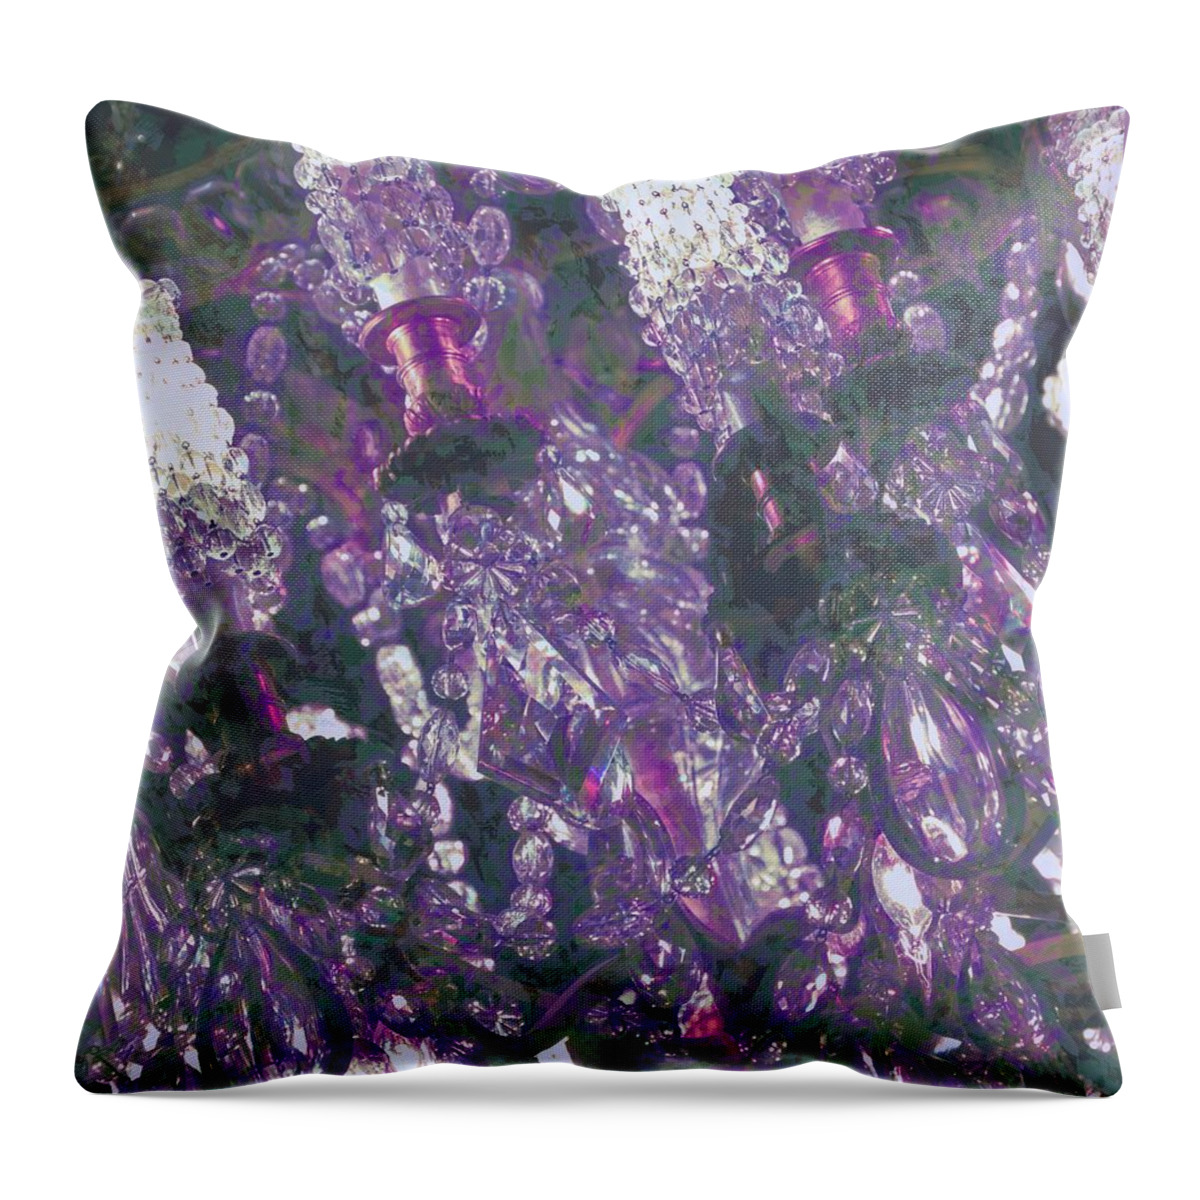 Chandelier Throw Pillow featuring the photograph Lavender Haze Chandelier by Rebecca Herranen